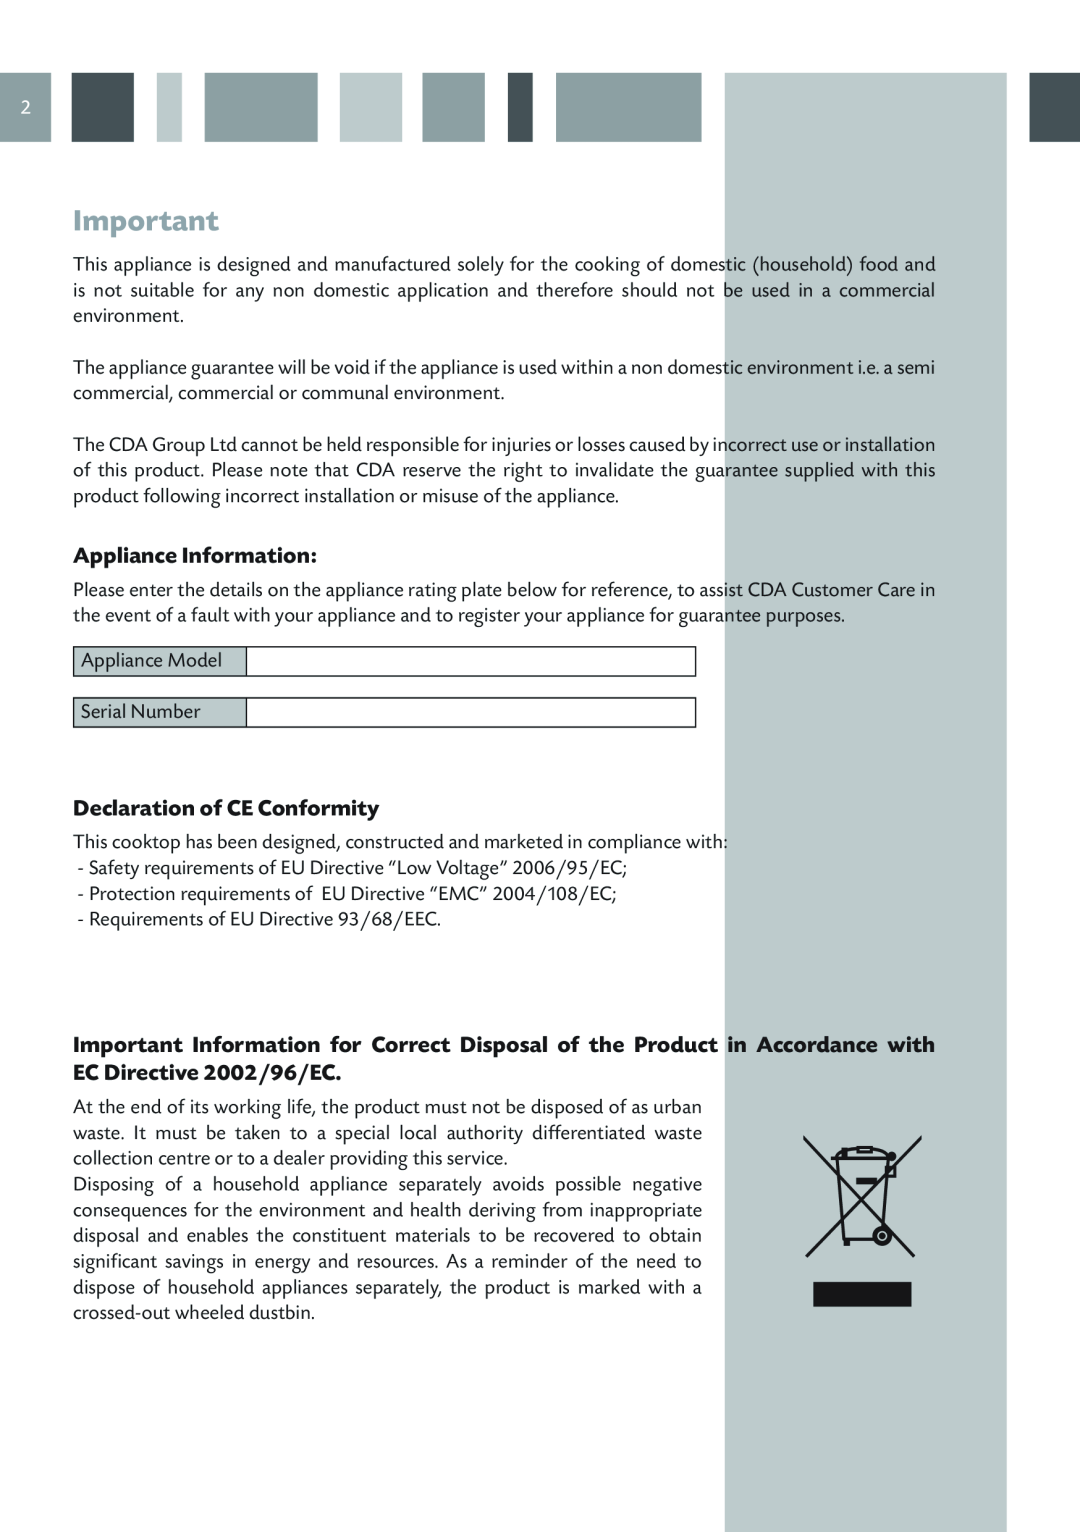 CDA HVC 32 manual Appliance Information, Declaration of CE Conformity 